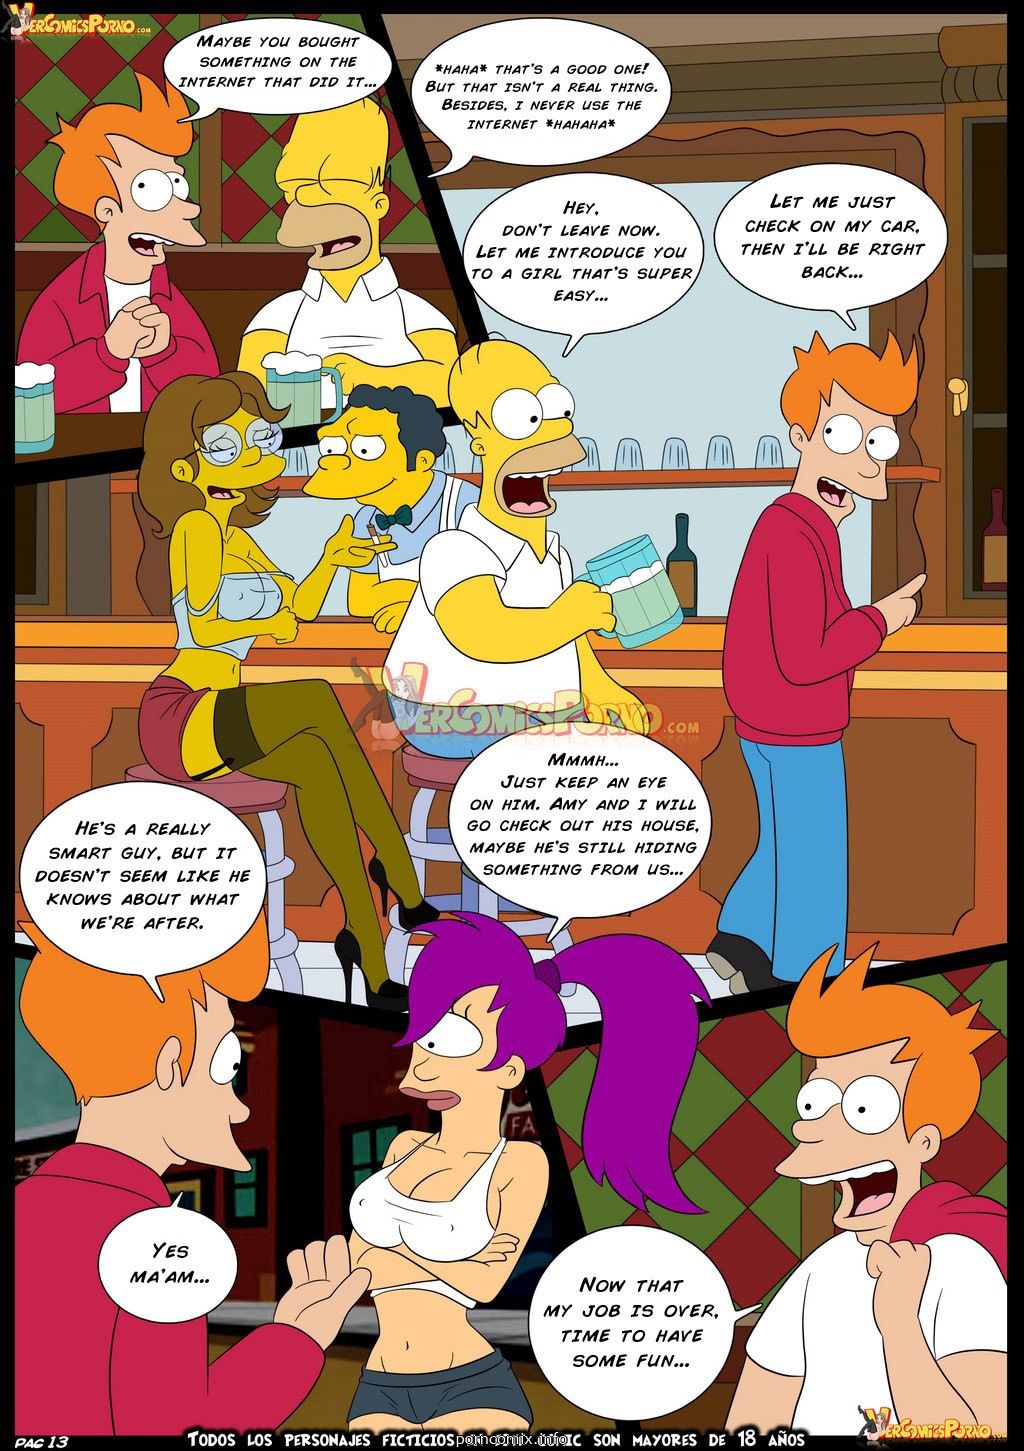 [CROC] The Simpsons / Futurama - Future purchase page 14